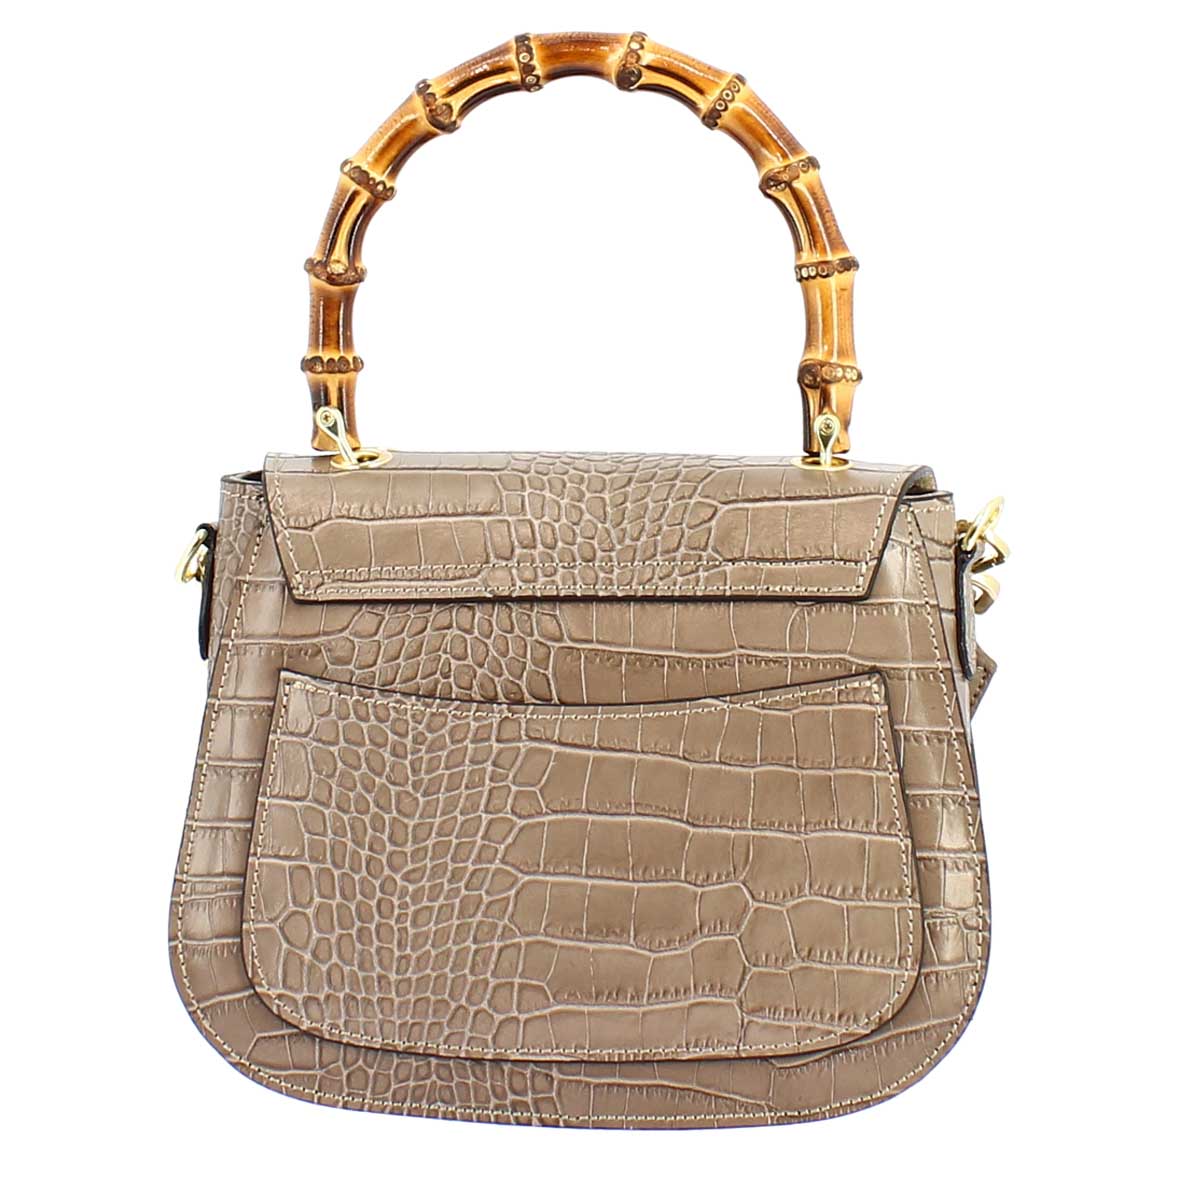 Handmade women's handbag in beige leather with removable shoulder strap